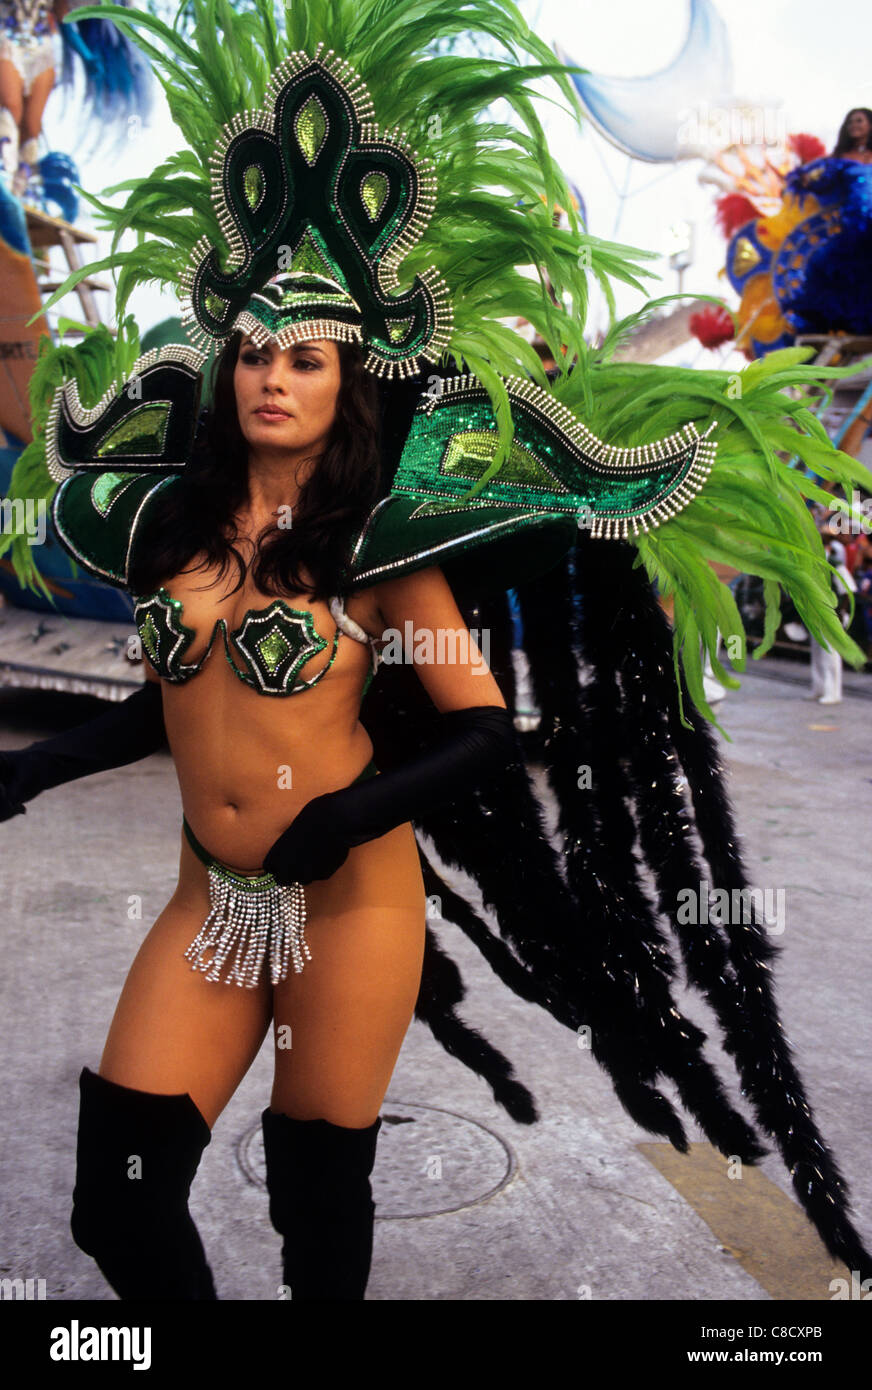 Rio de Janeiro, Brazil. Carnival samba school; girl in skimpy dark and light green bikini costume with large feather headdress. Stock Photo